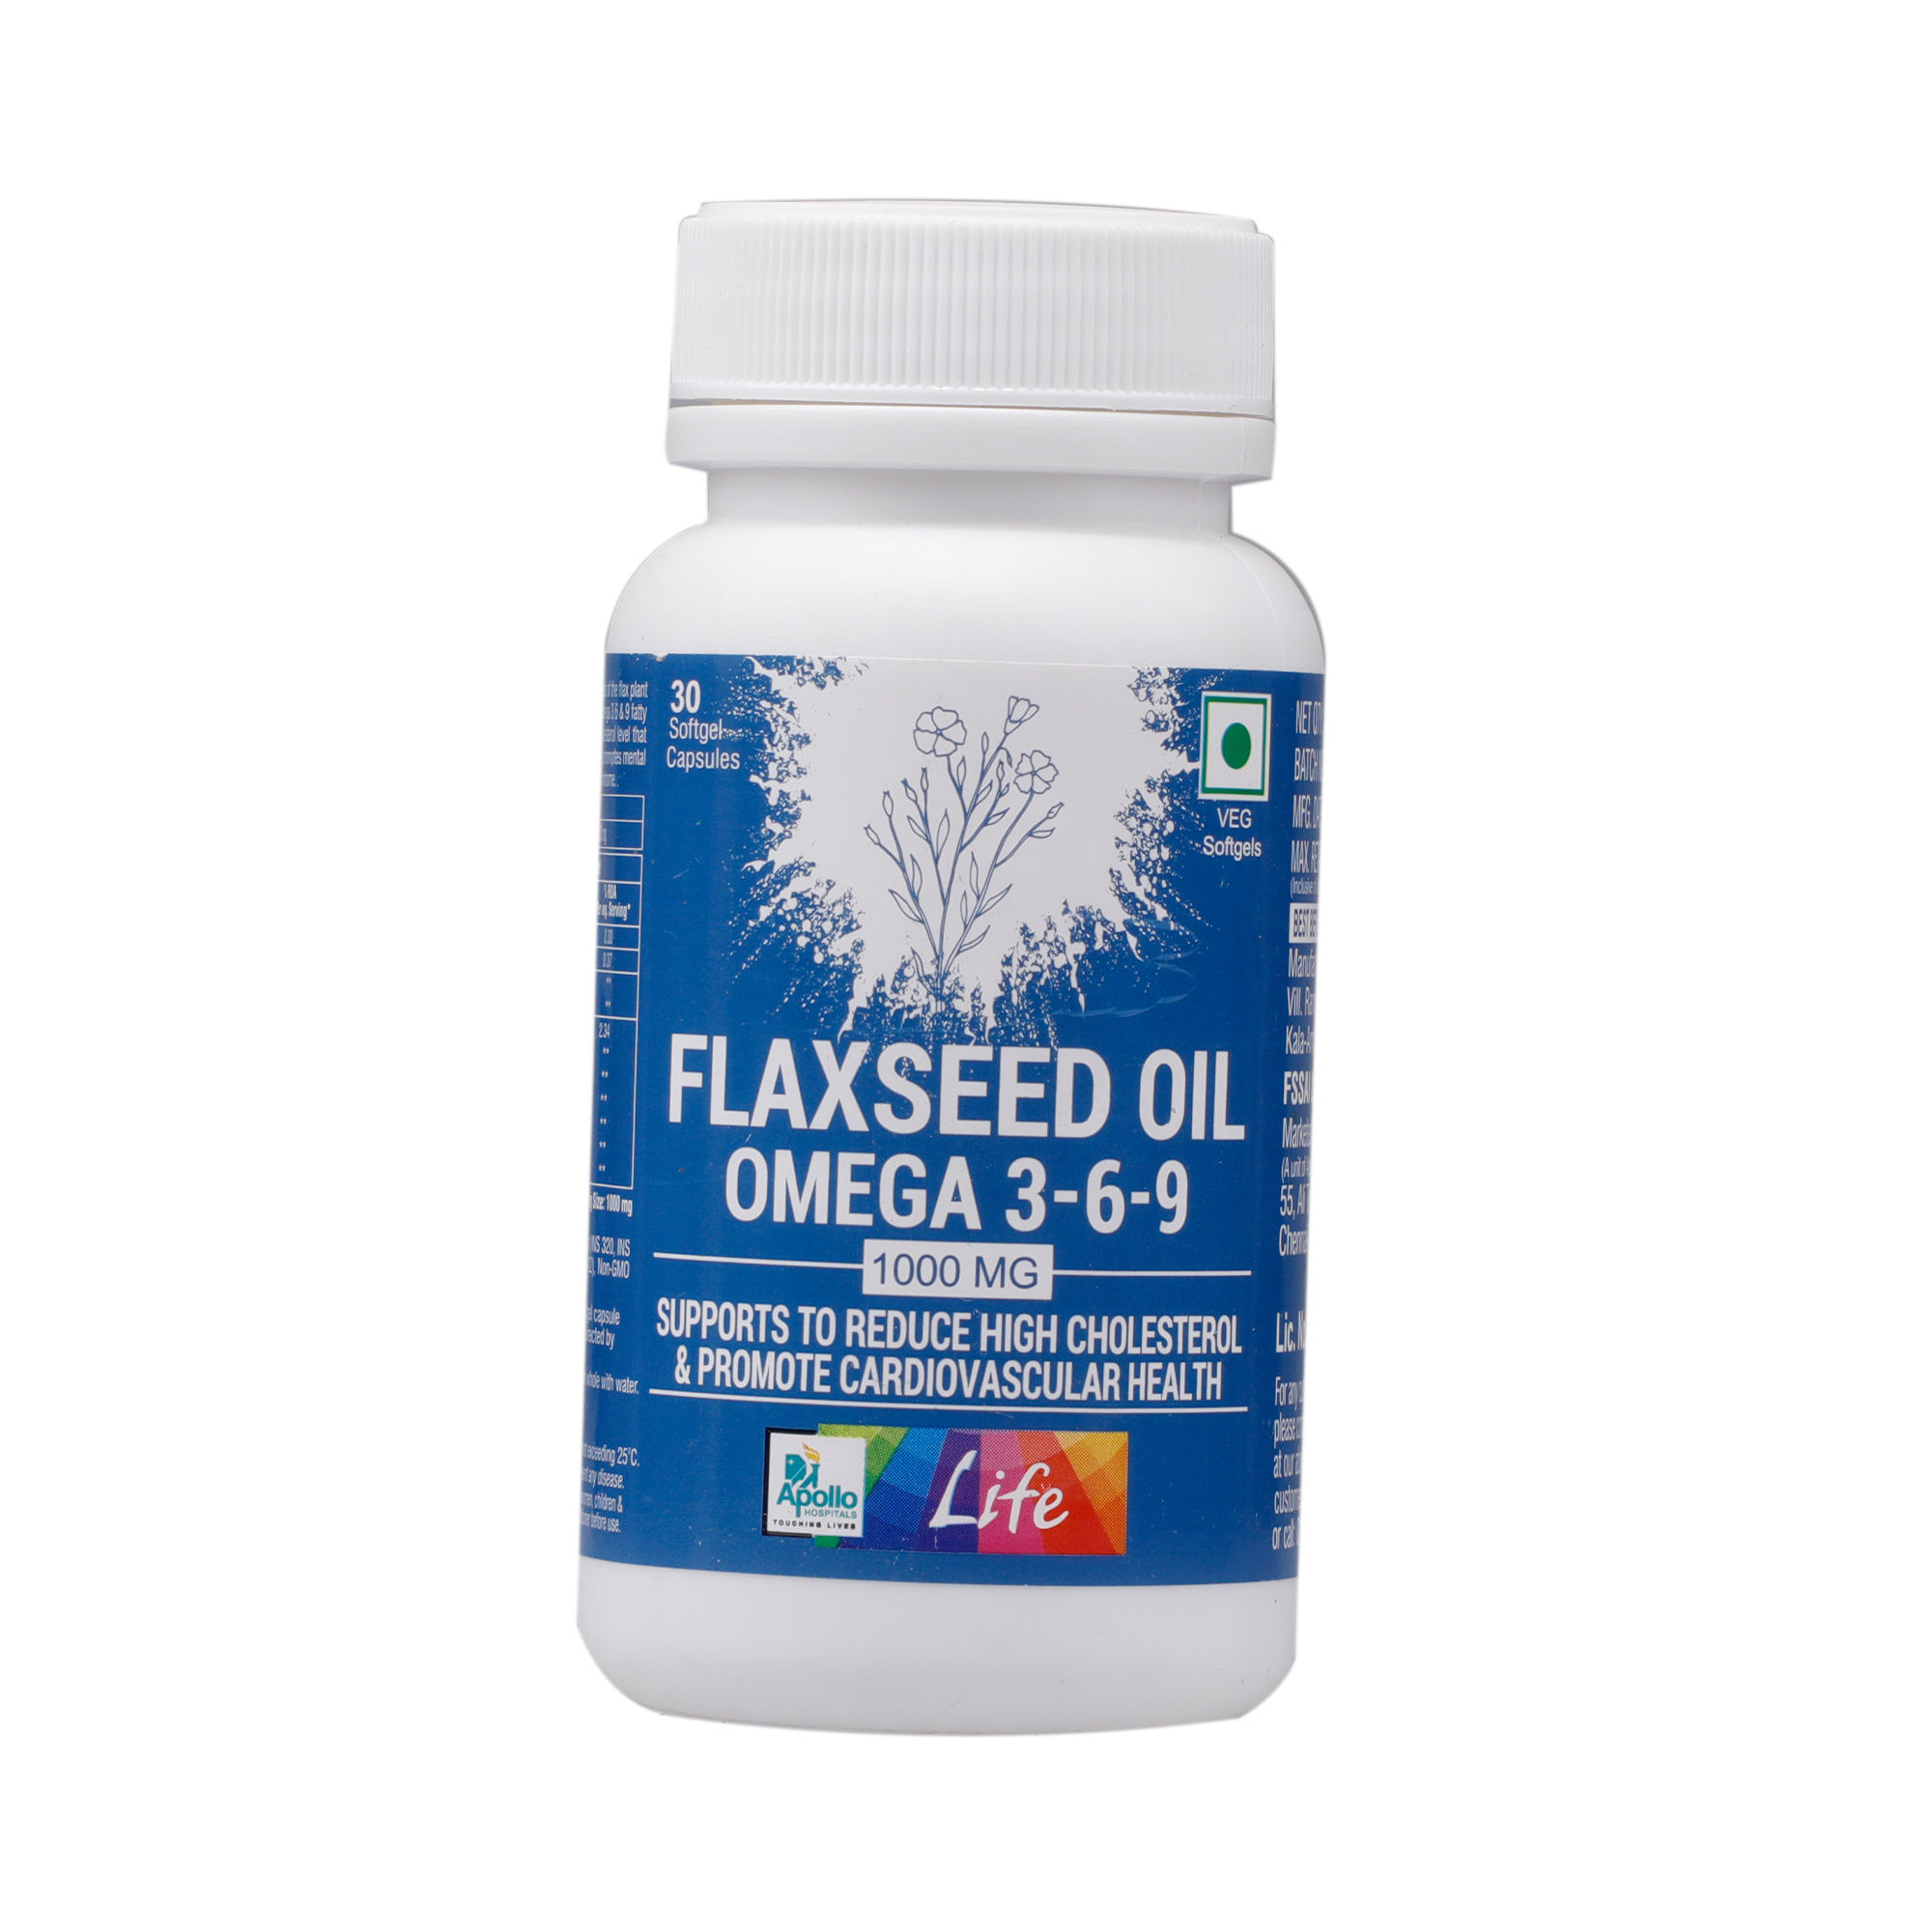 Apollo Life Flaxseed Oil Omega 3-6-9 1000 mg, 30 Capsules, Pack of 1 